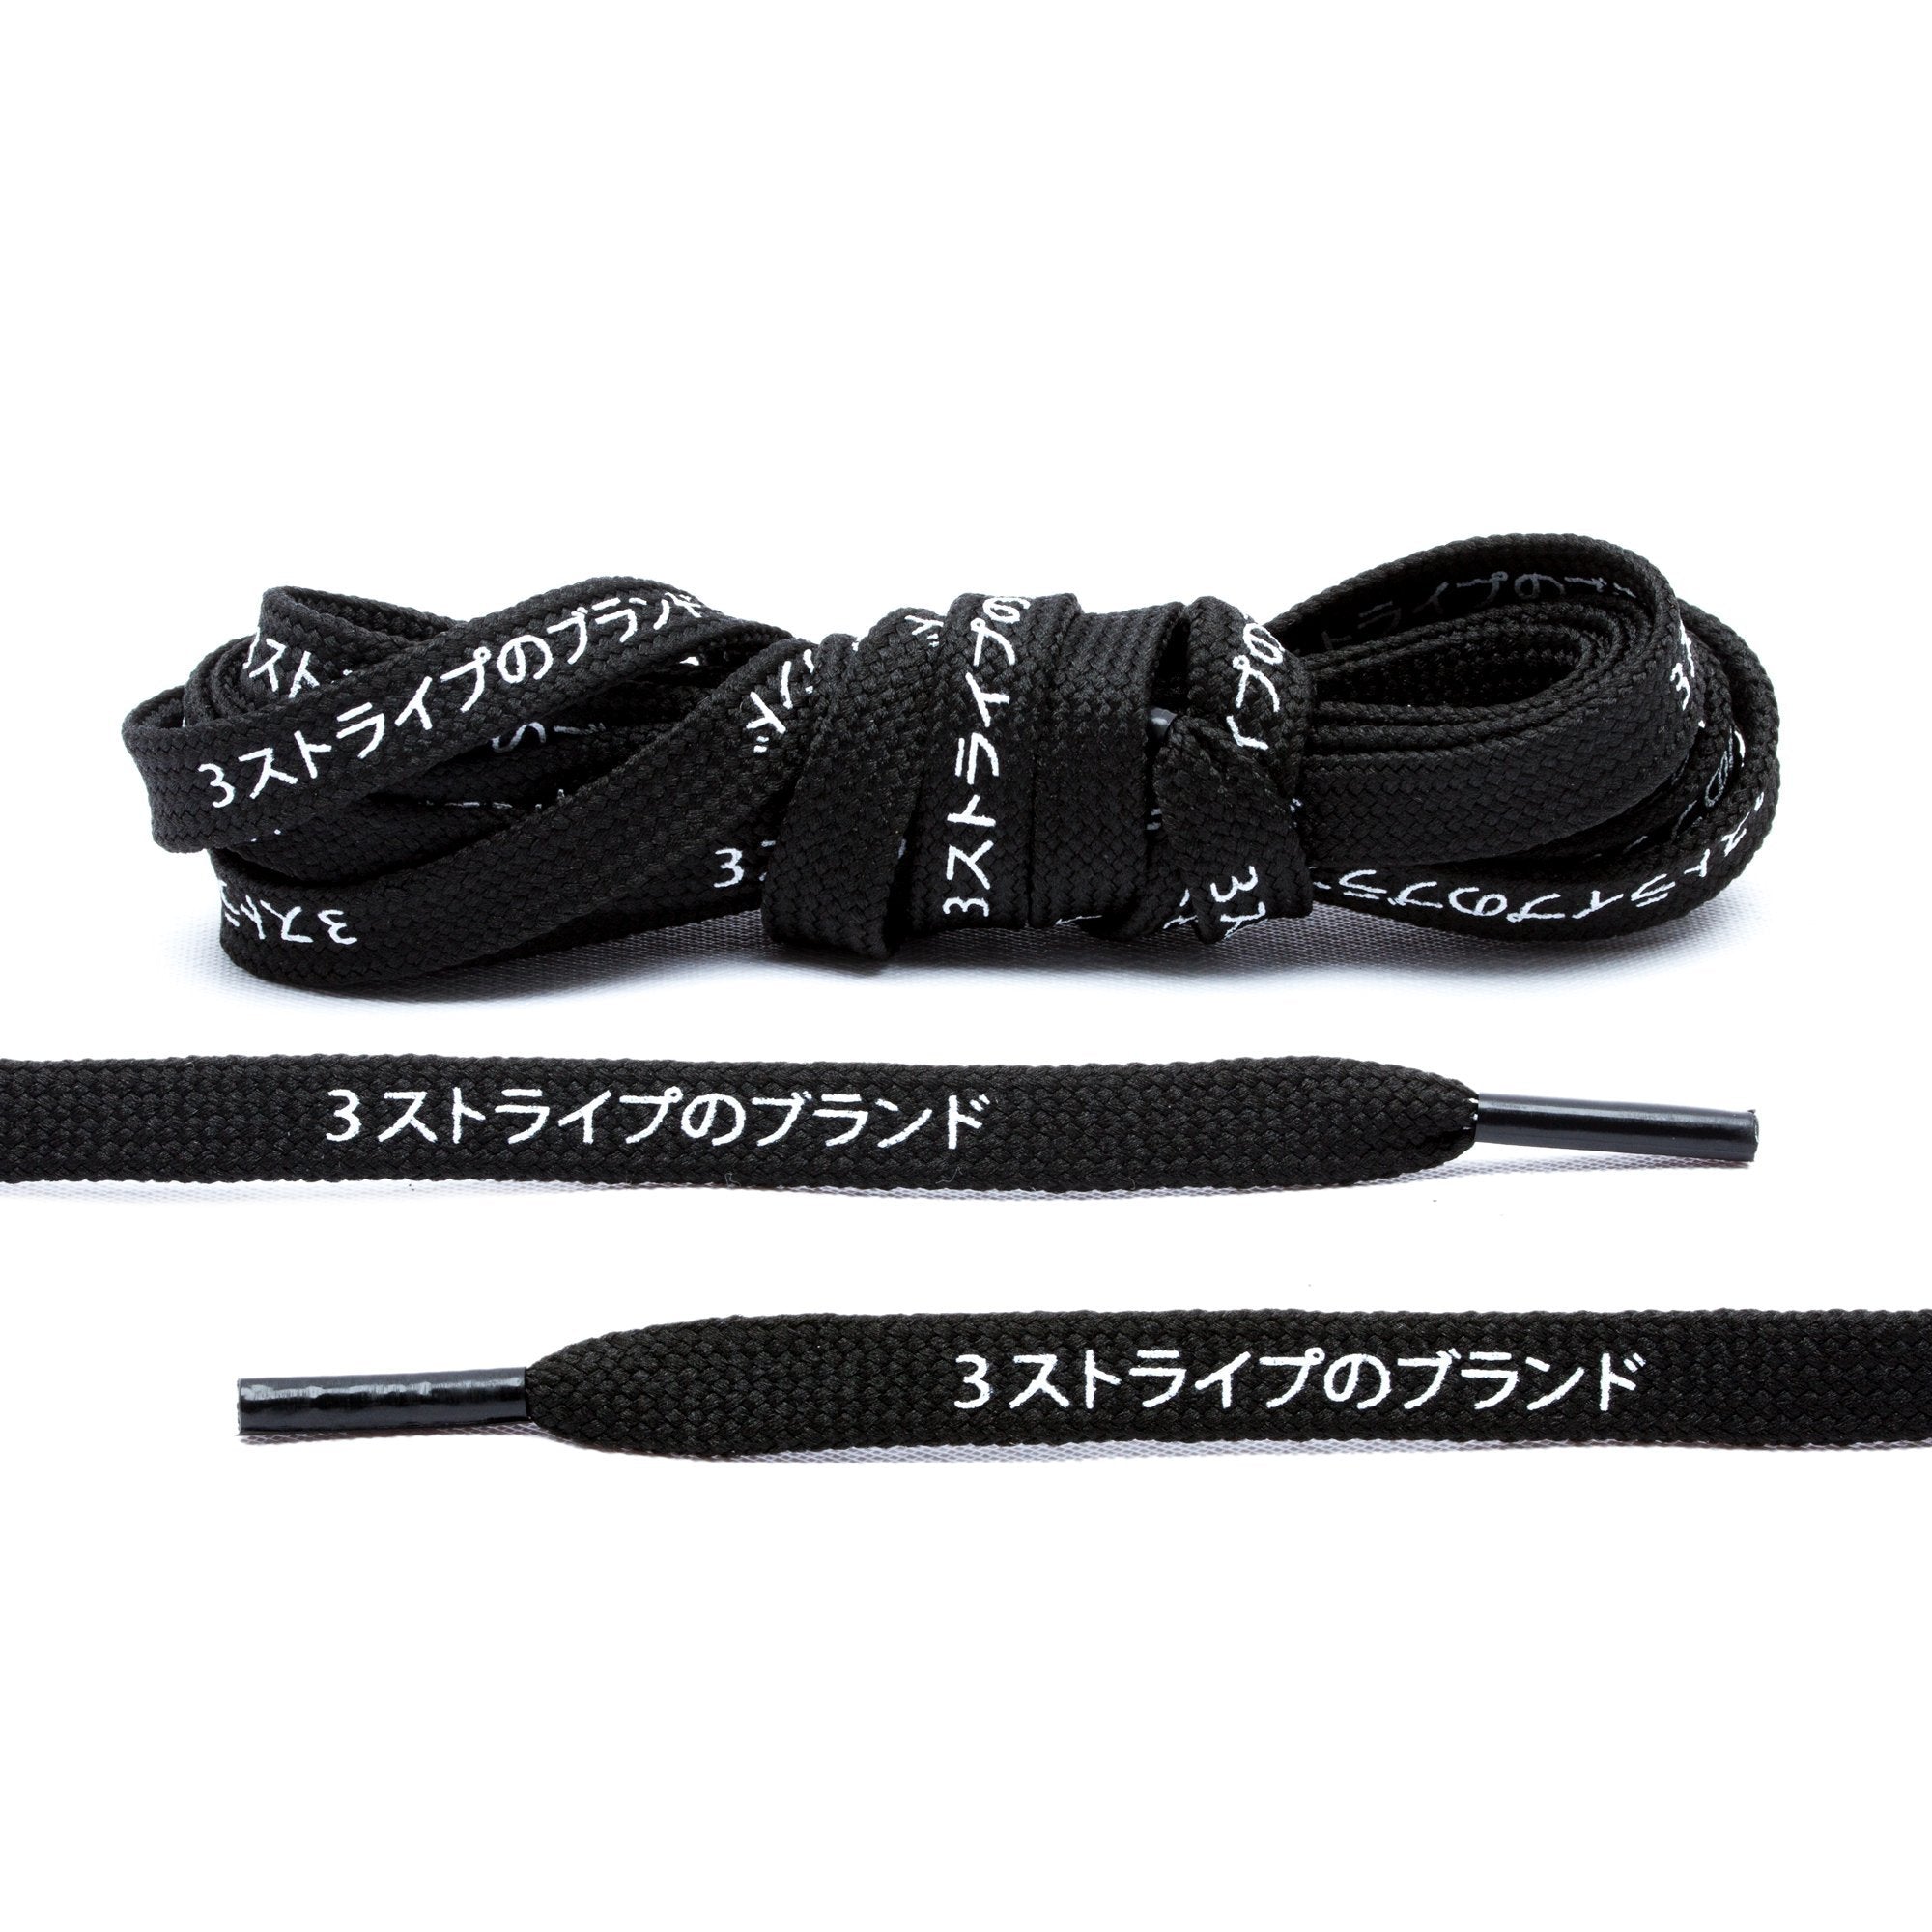 Japanese Katakana Shoe Laces By Lace Lab